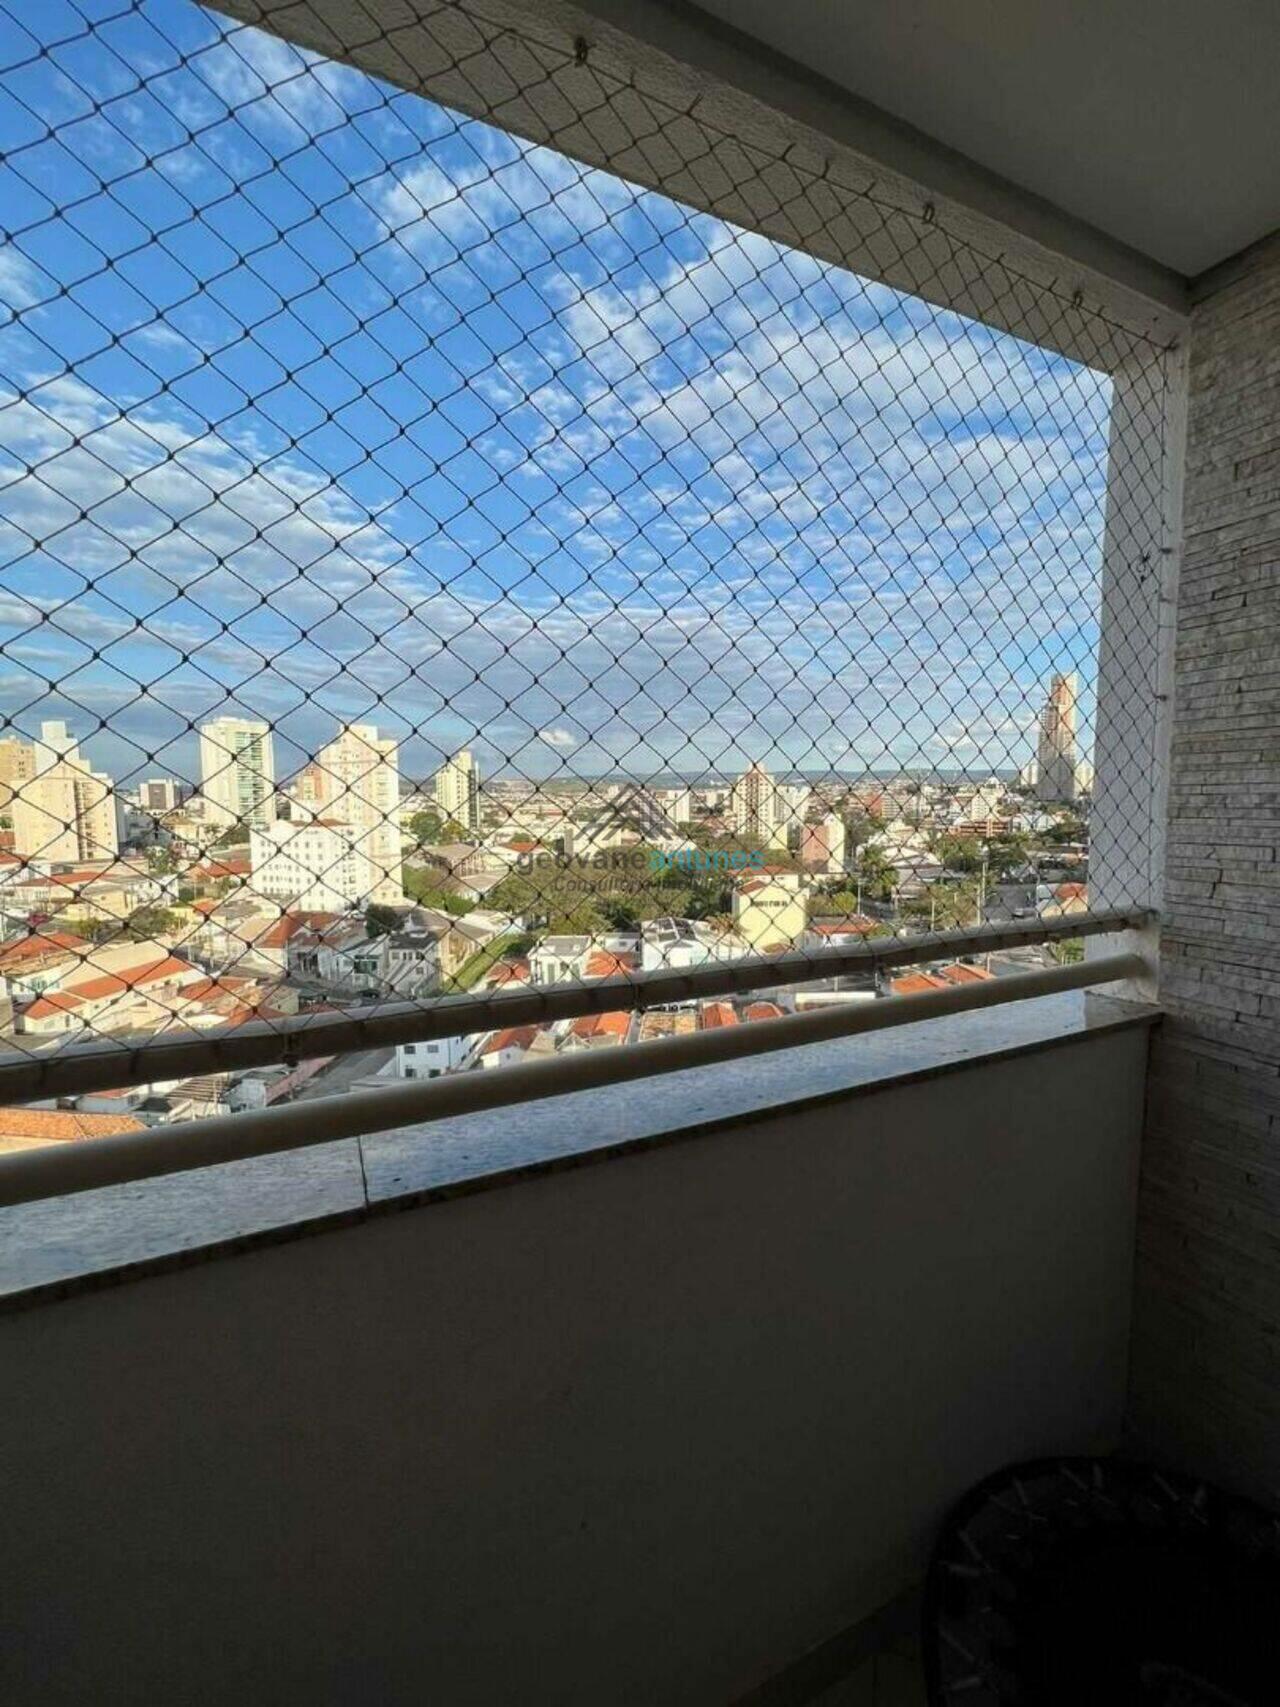 Apartamento Jardim Paulistano, Sorocaba - SP